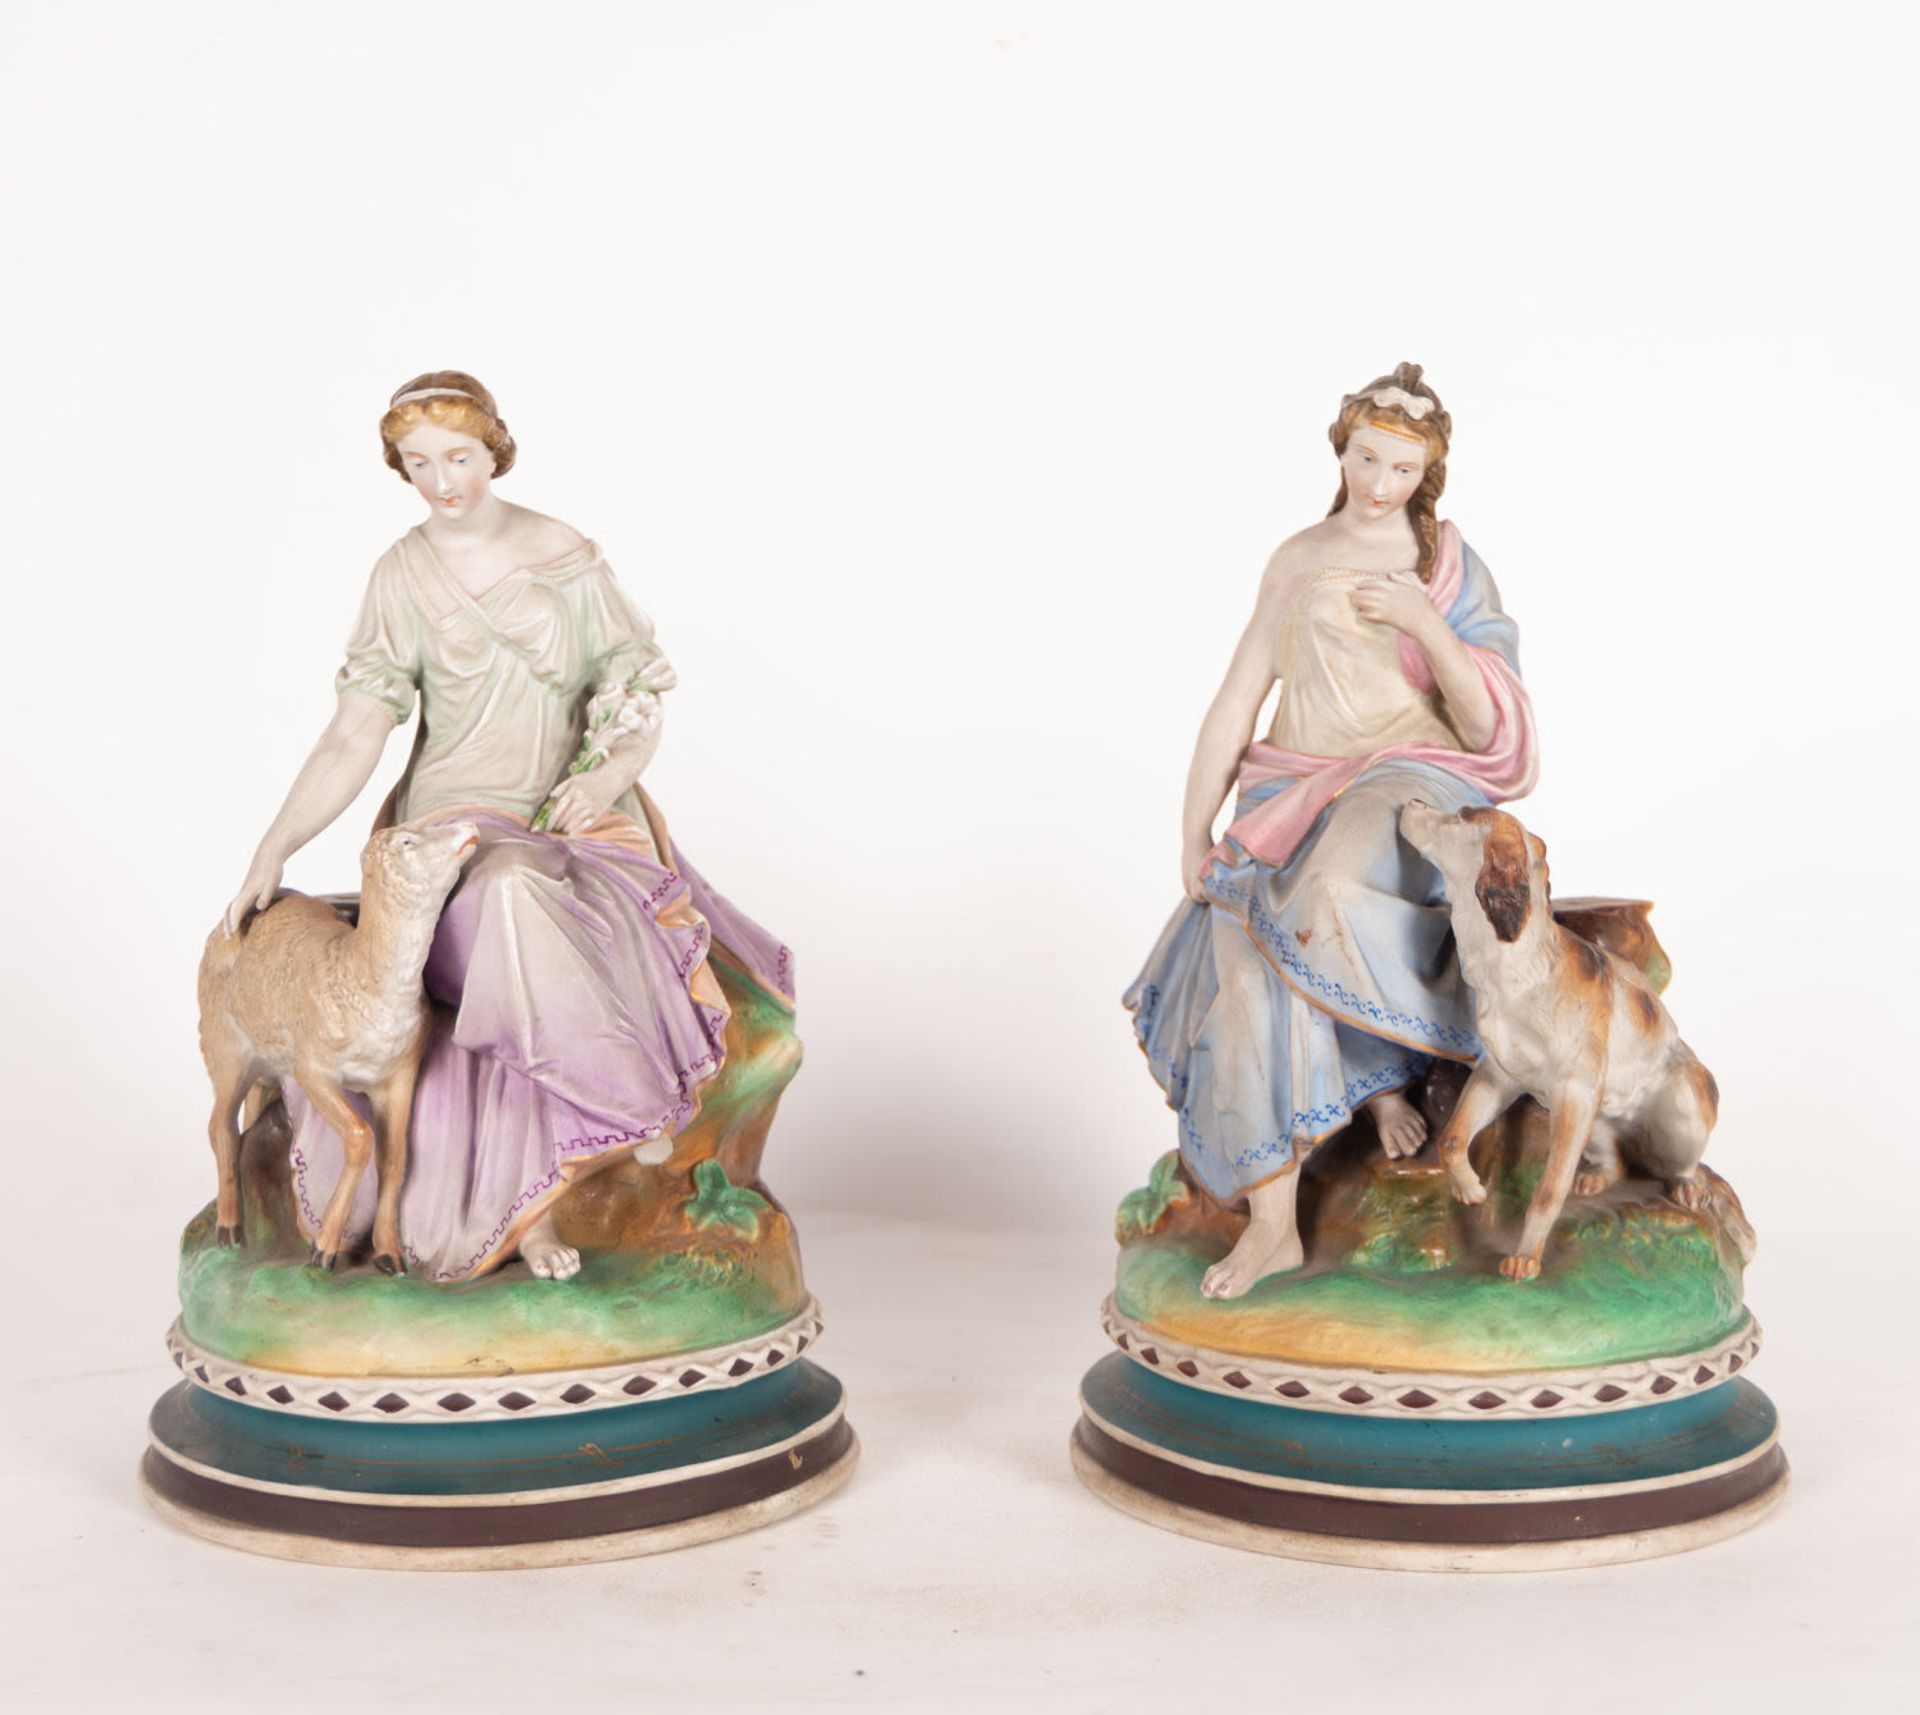 Pair of Shepherdesses in Biscuit Porcelain, Italian school of the late nineteenth century